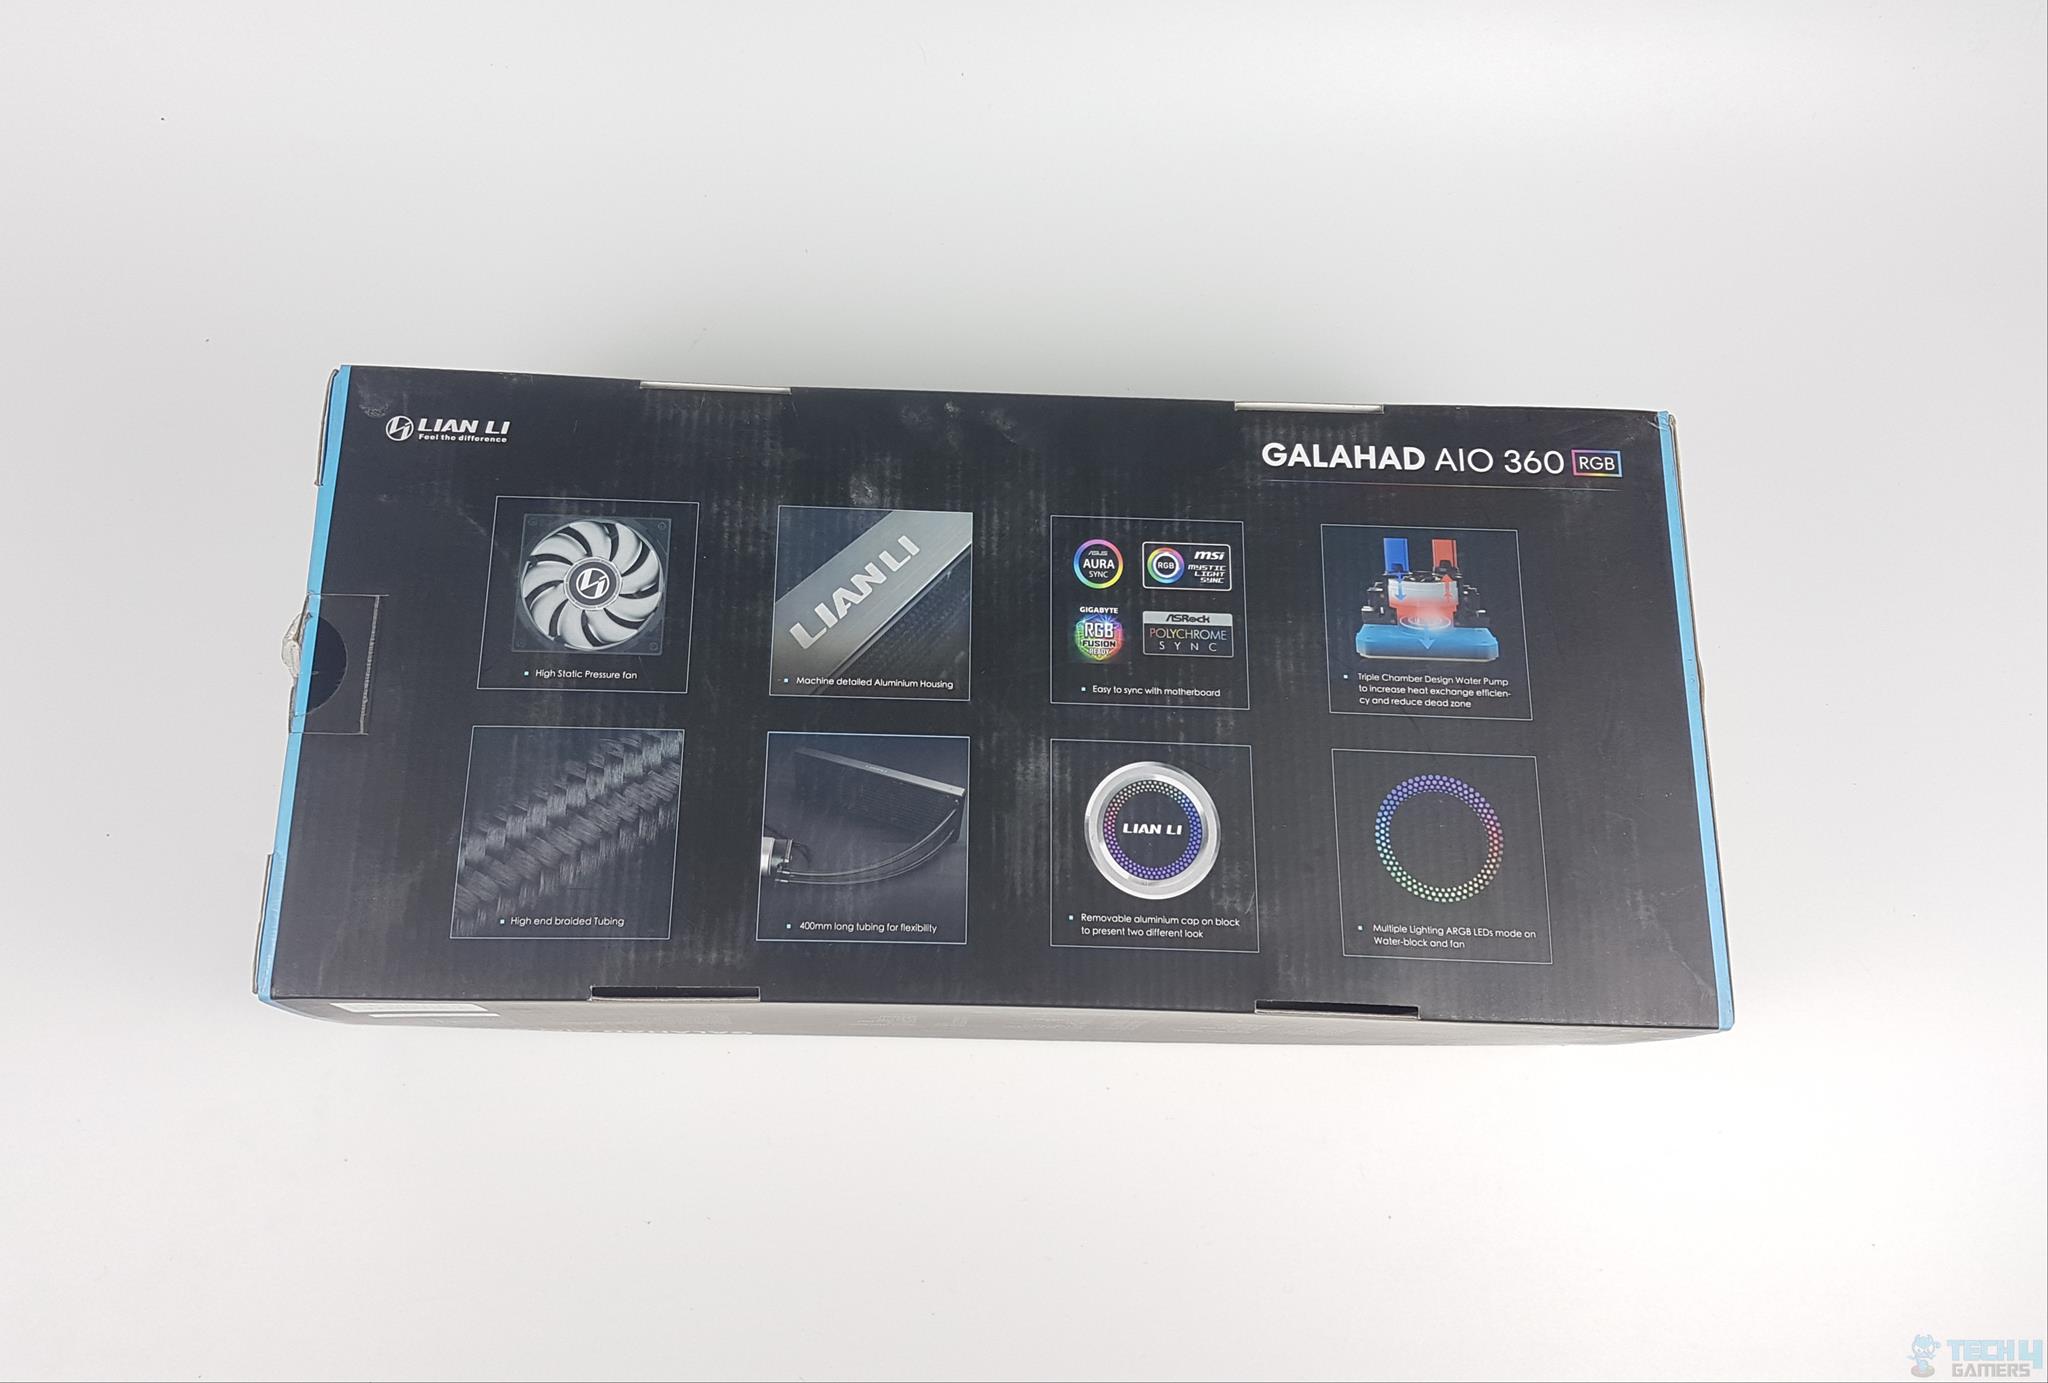 Lian Li GALAHAD 360 White Cooler — The backside of the box